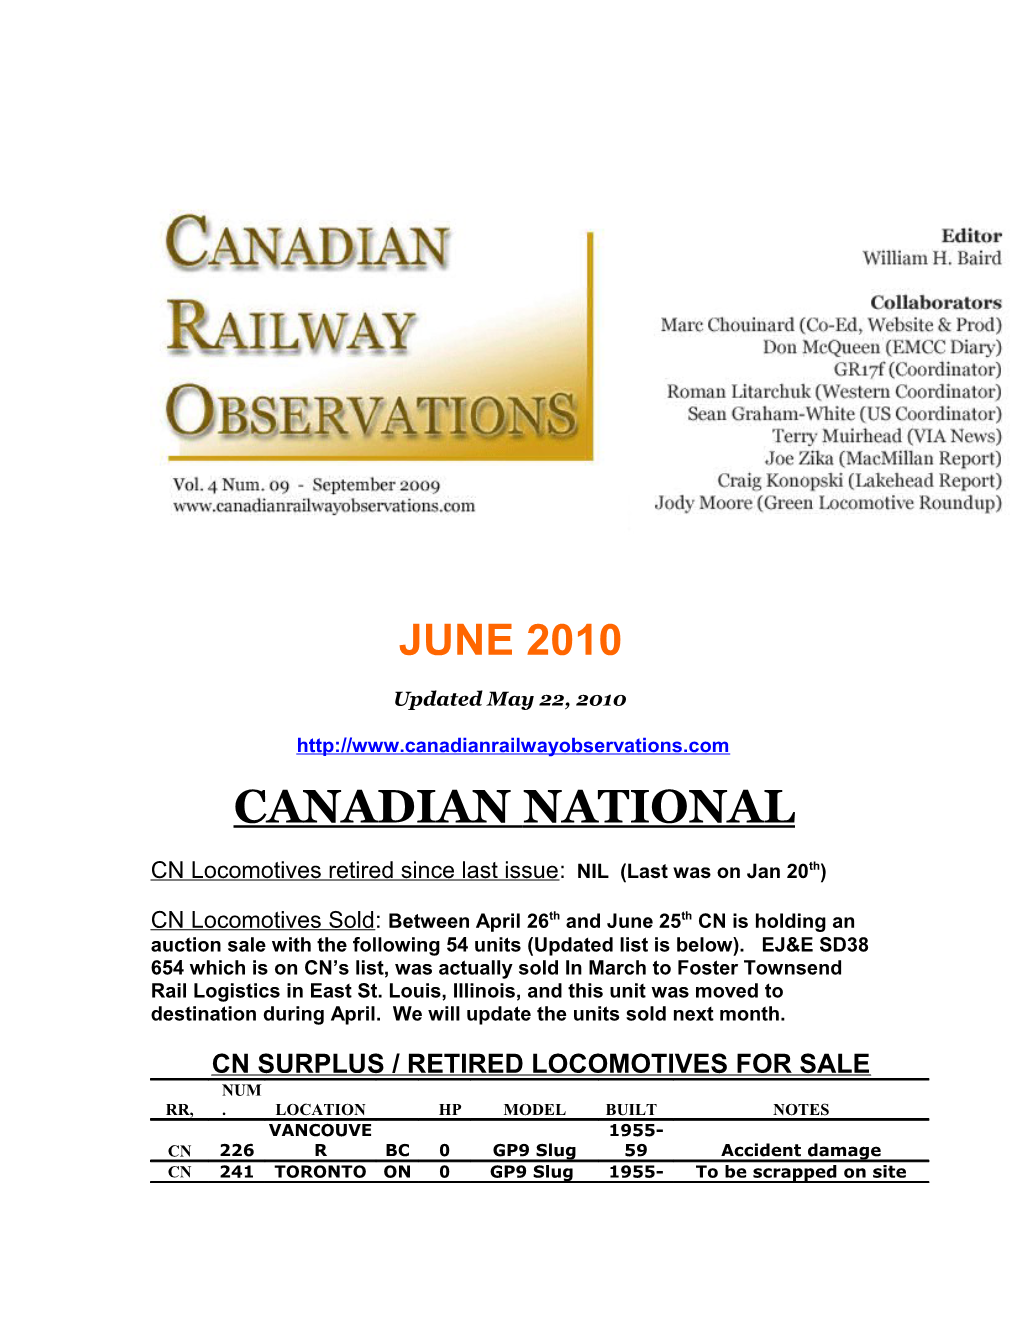 Cn Surplus / Retired Locomotives for Sale